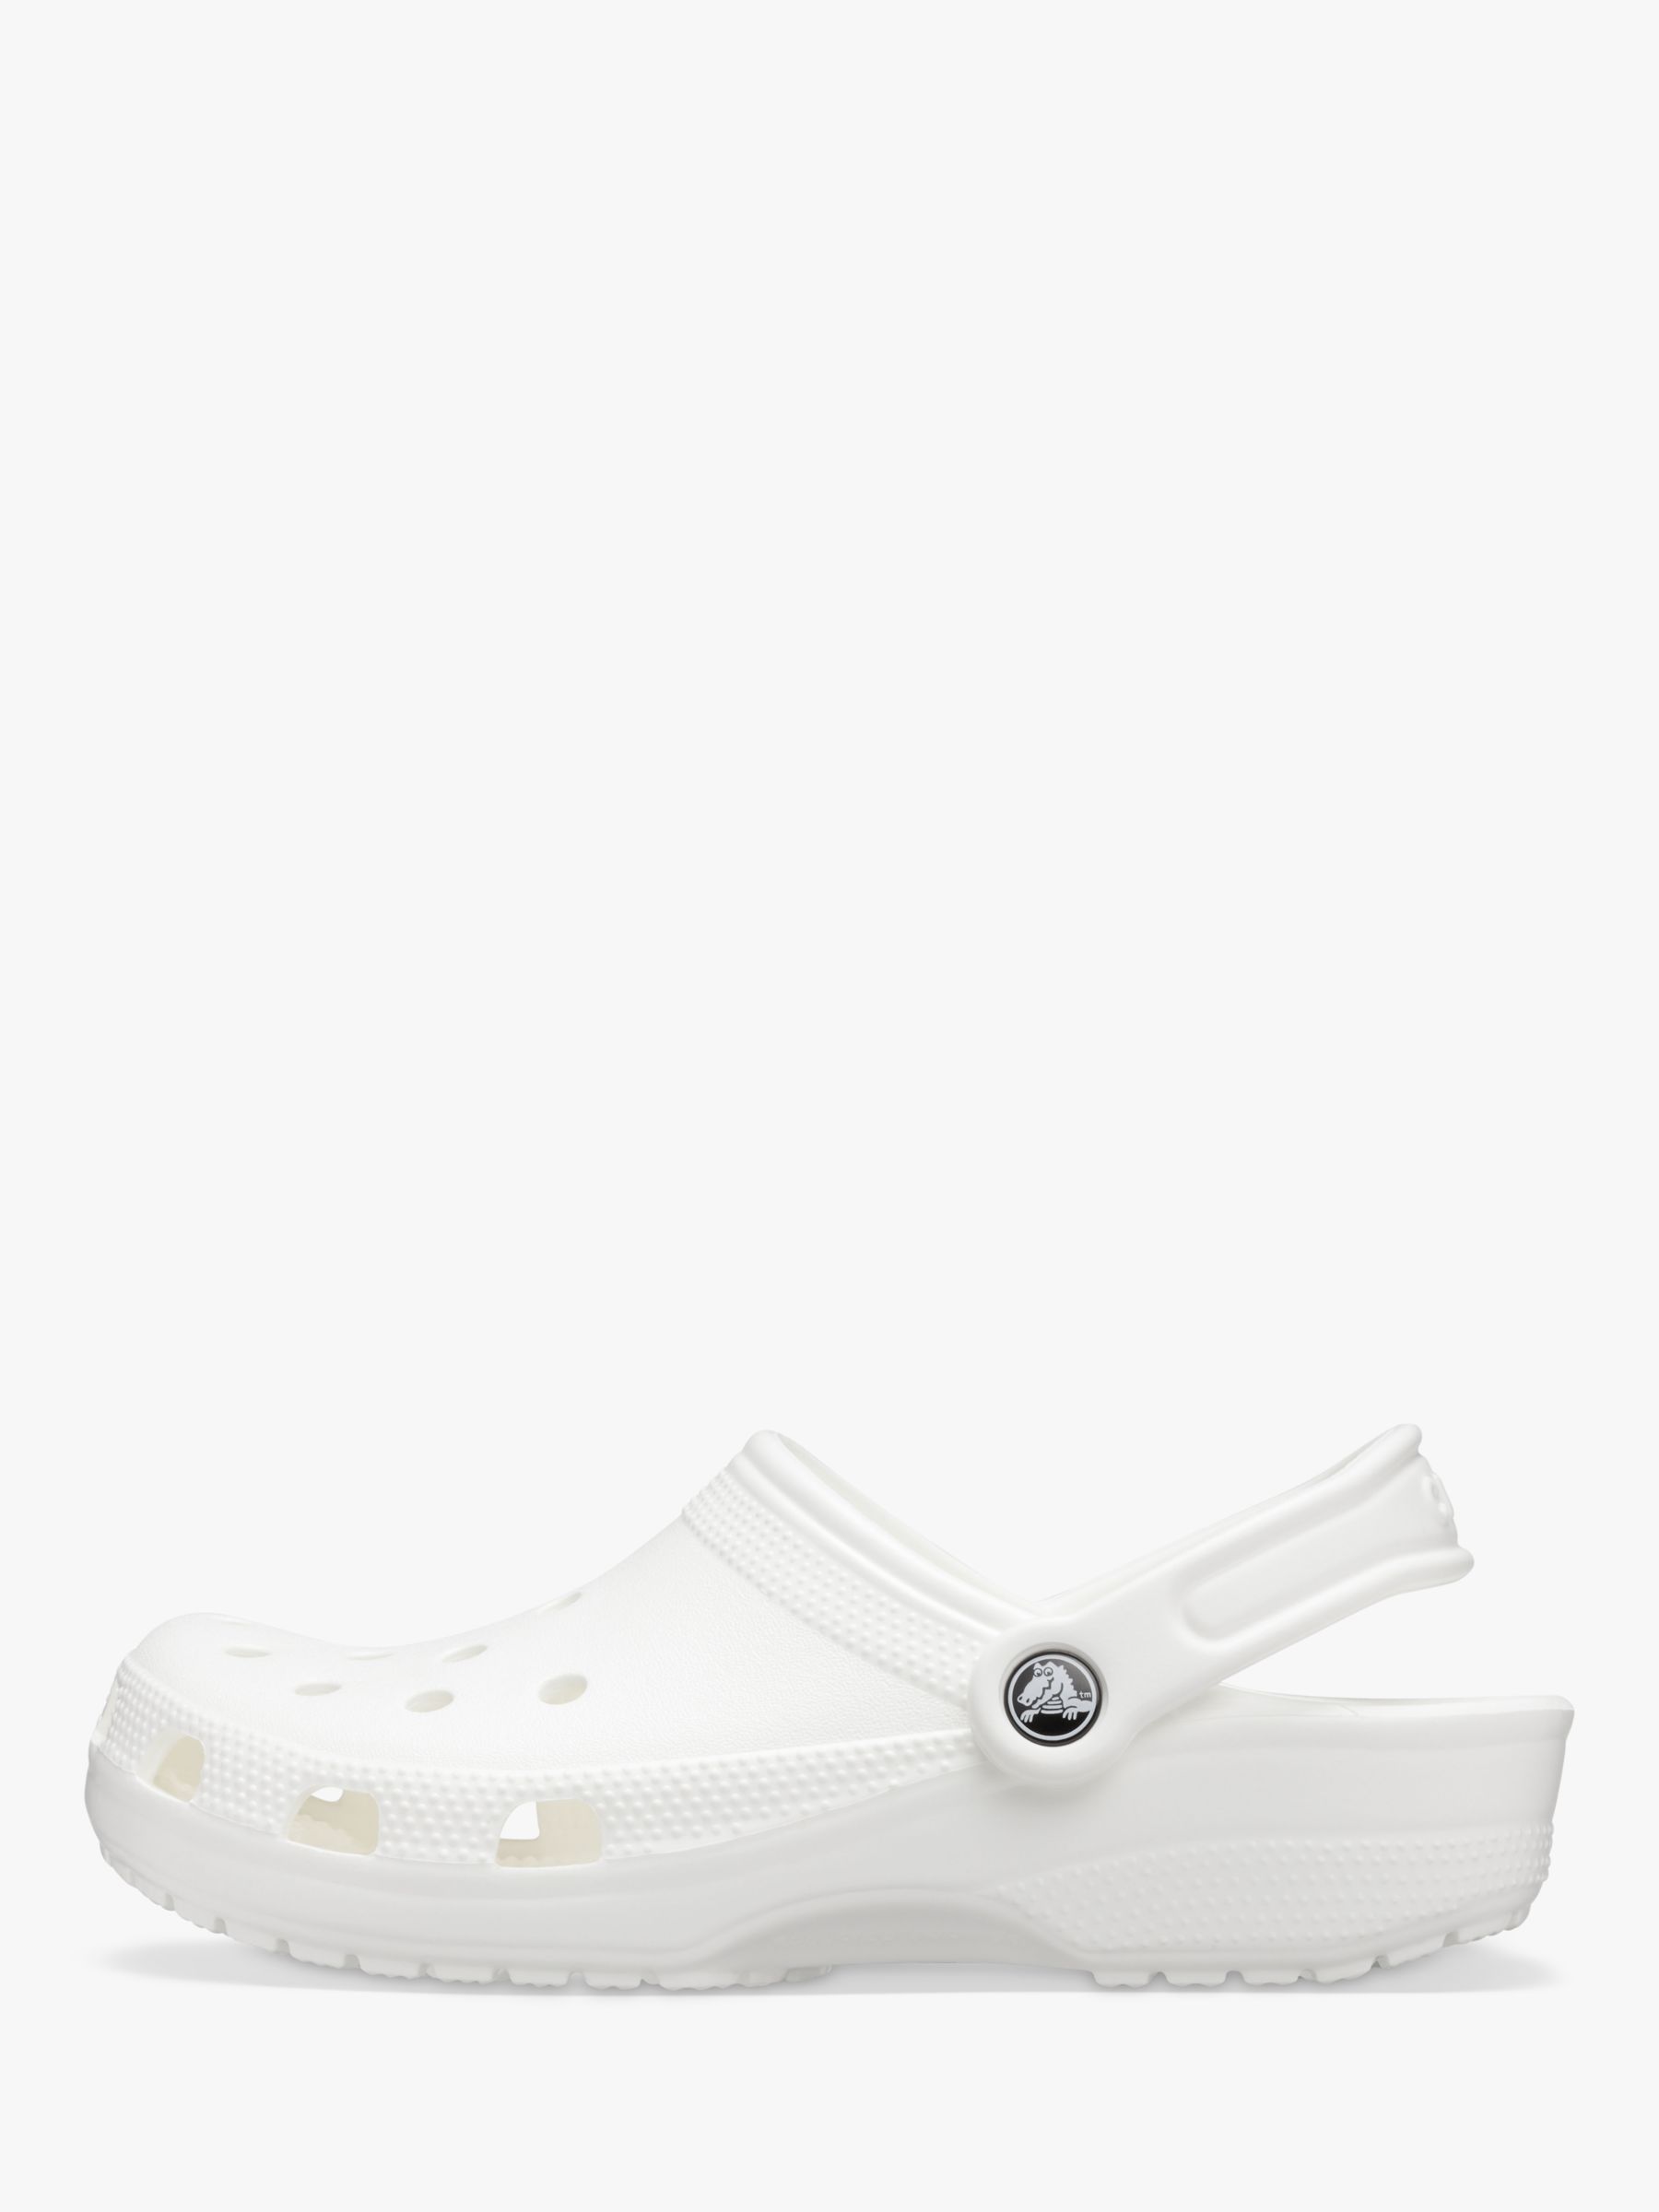 Crocs Classic Clogs, White, 7